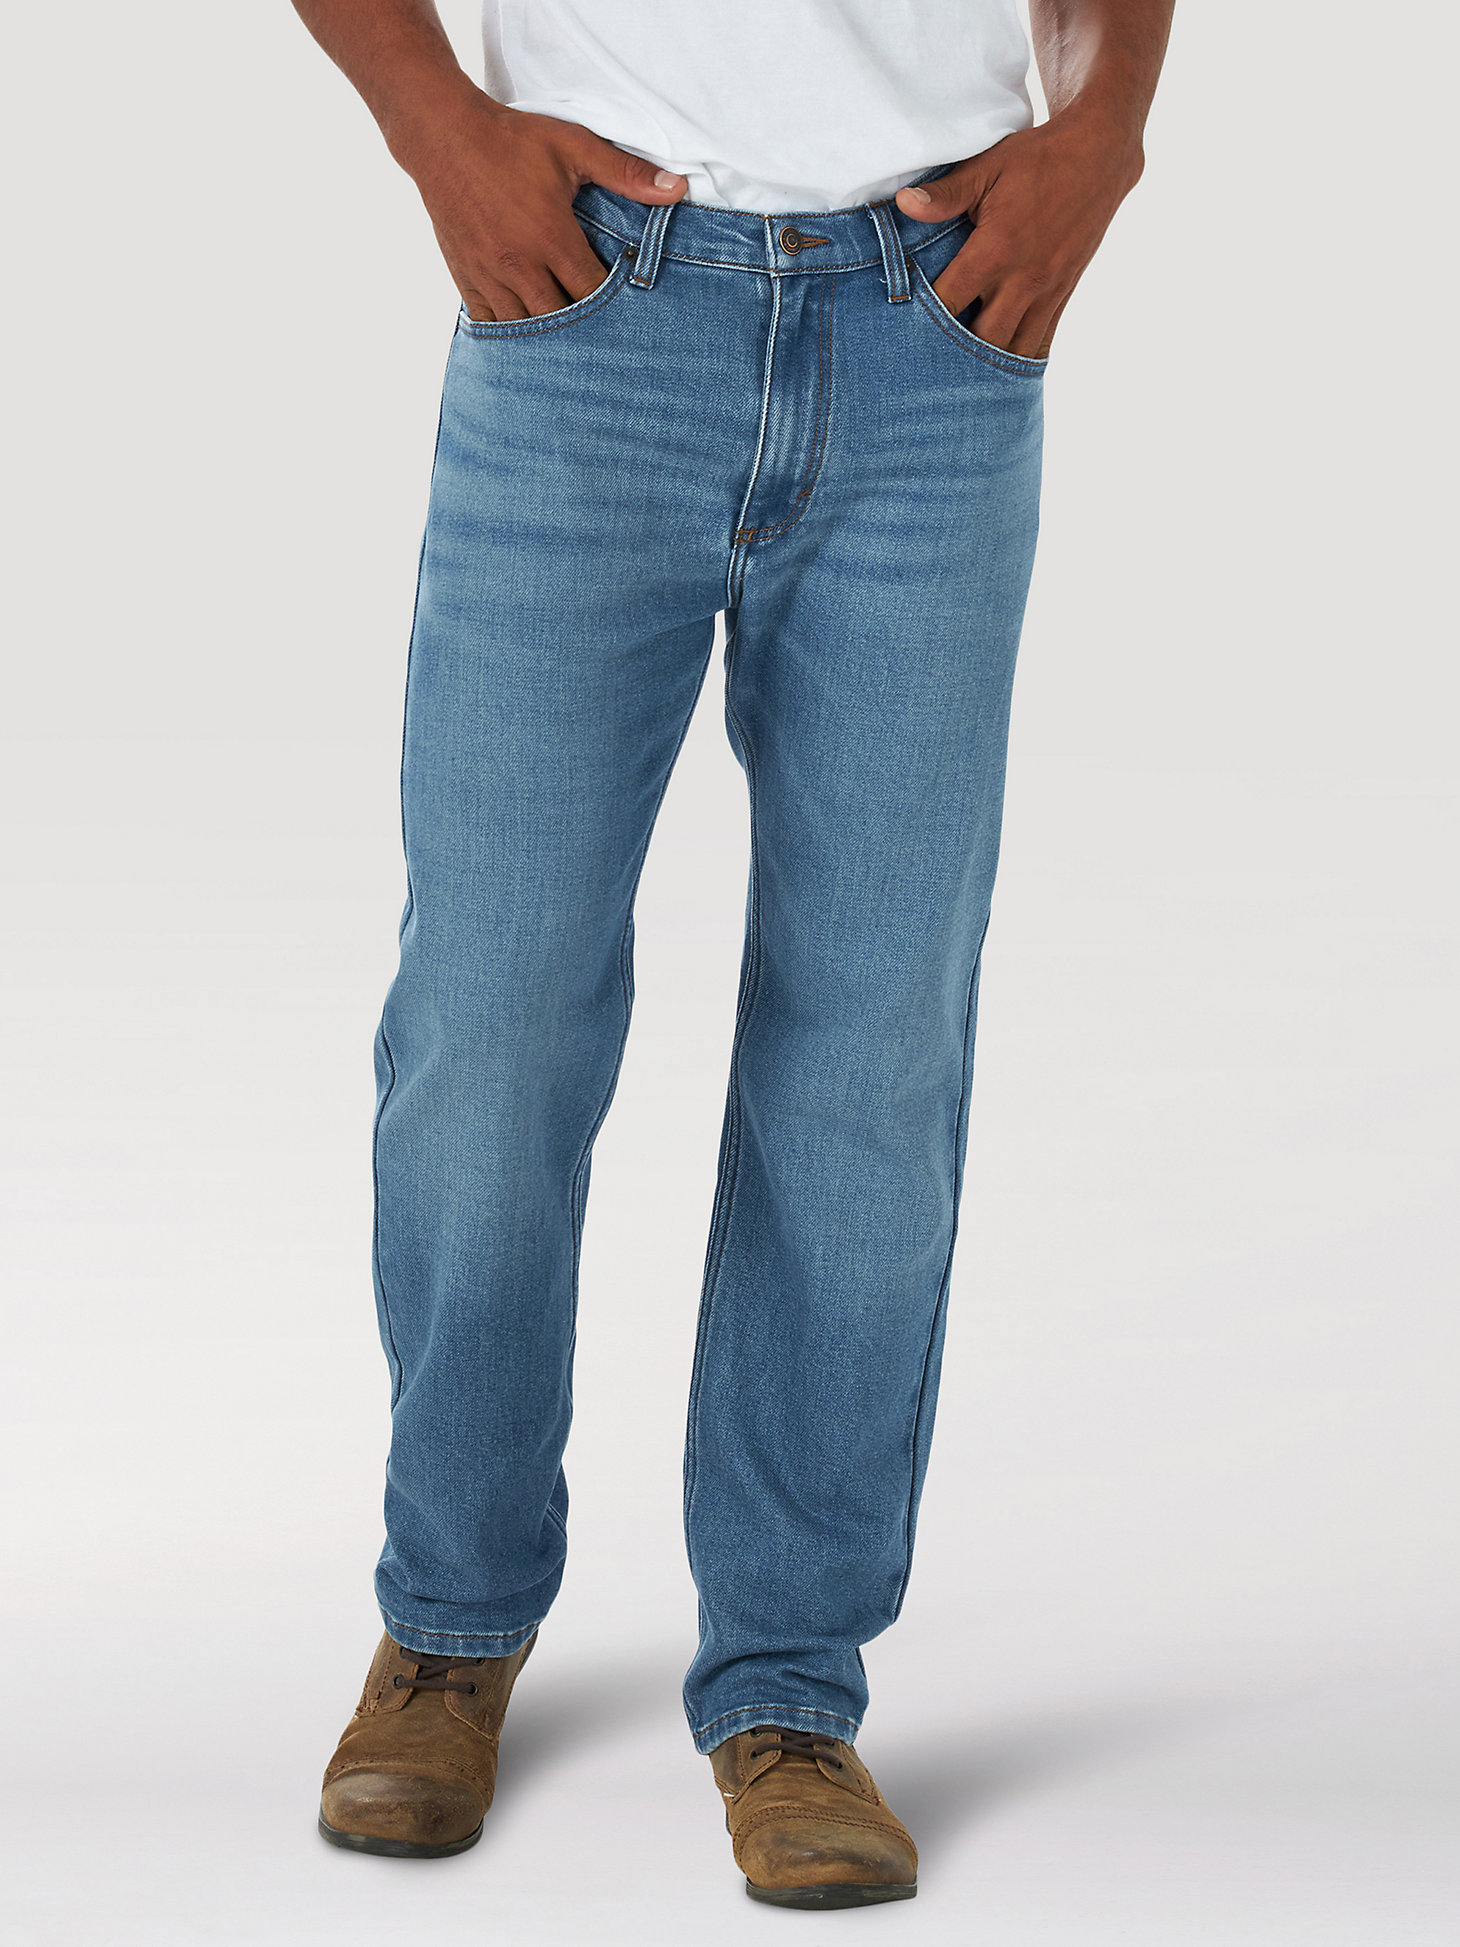 Men's Wrangler Authentics Classic 5-Pocket Regular Fit Jean with Flex 